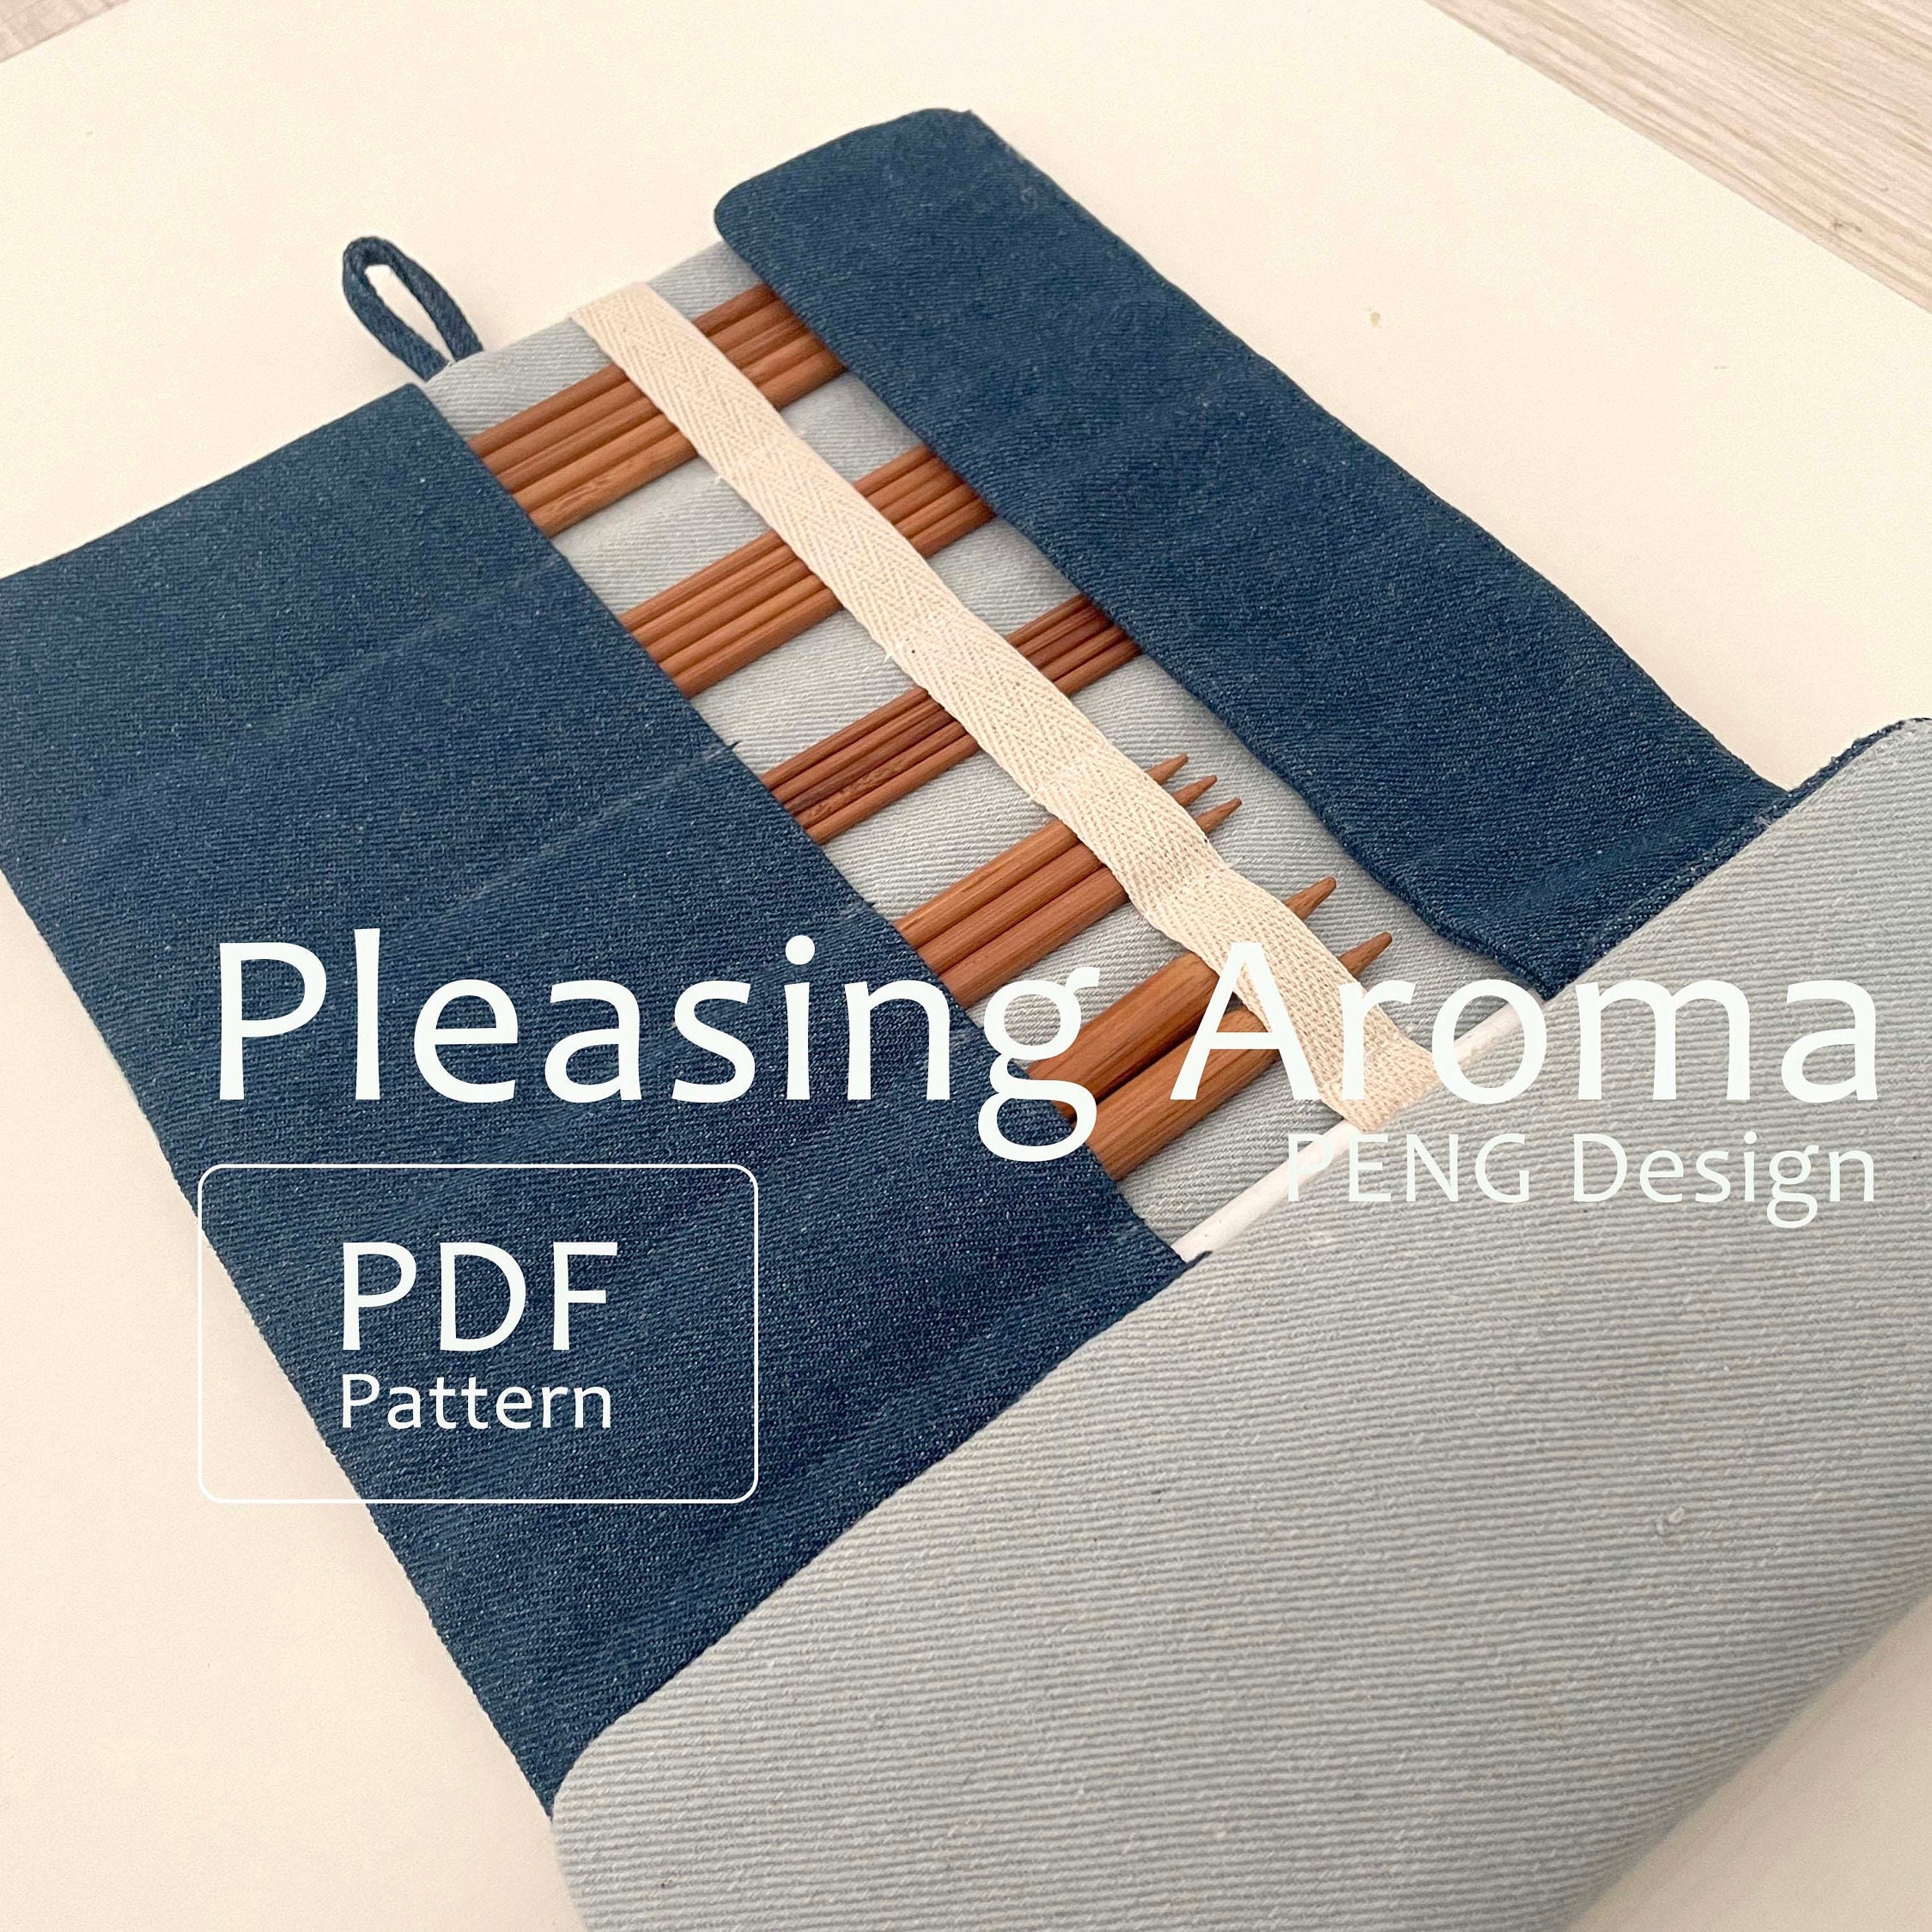 Ultimate Art Organizer PDF Sewing Pattern 